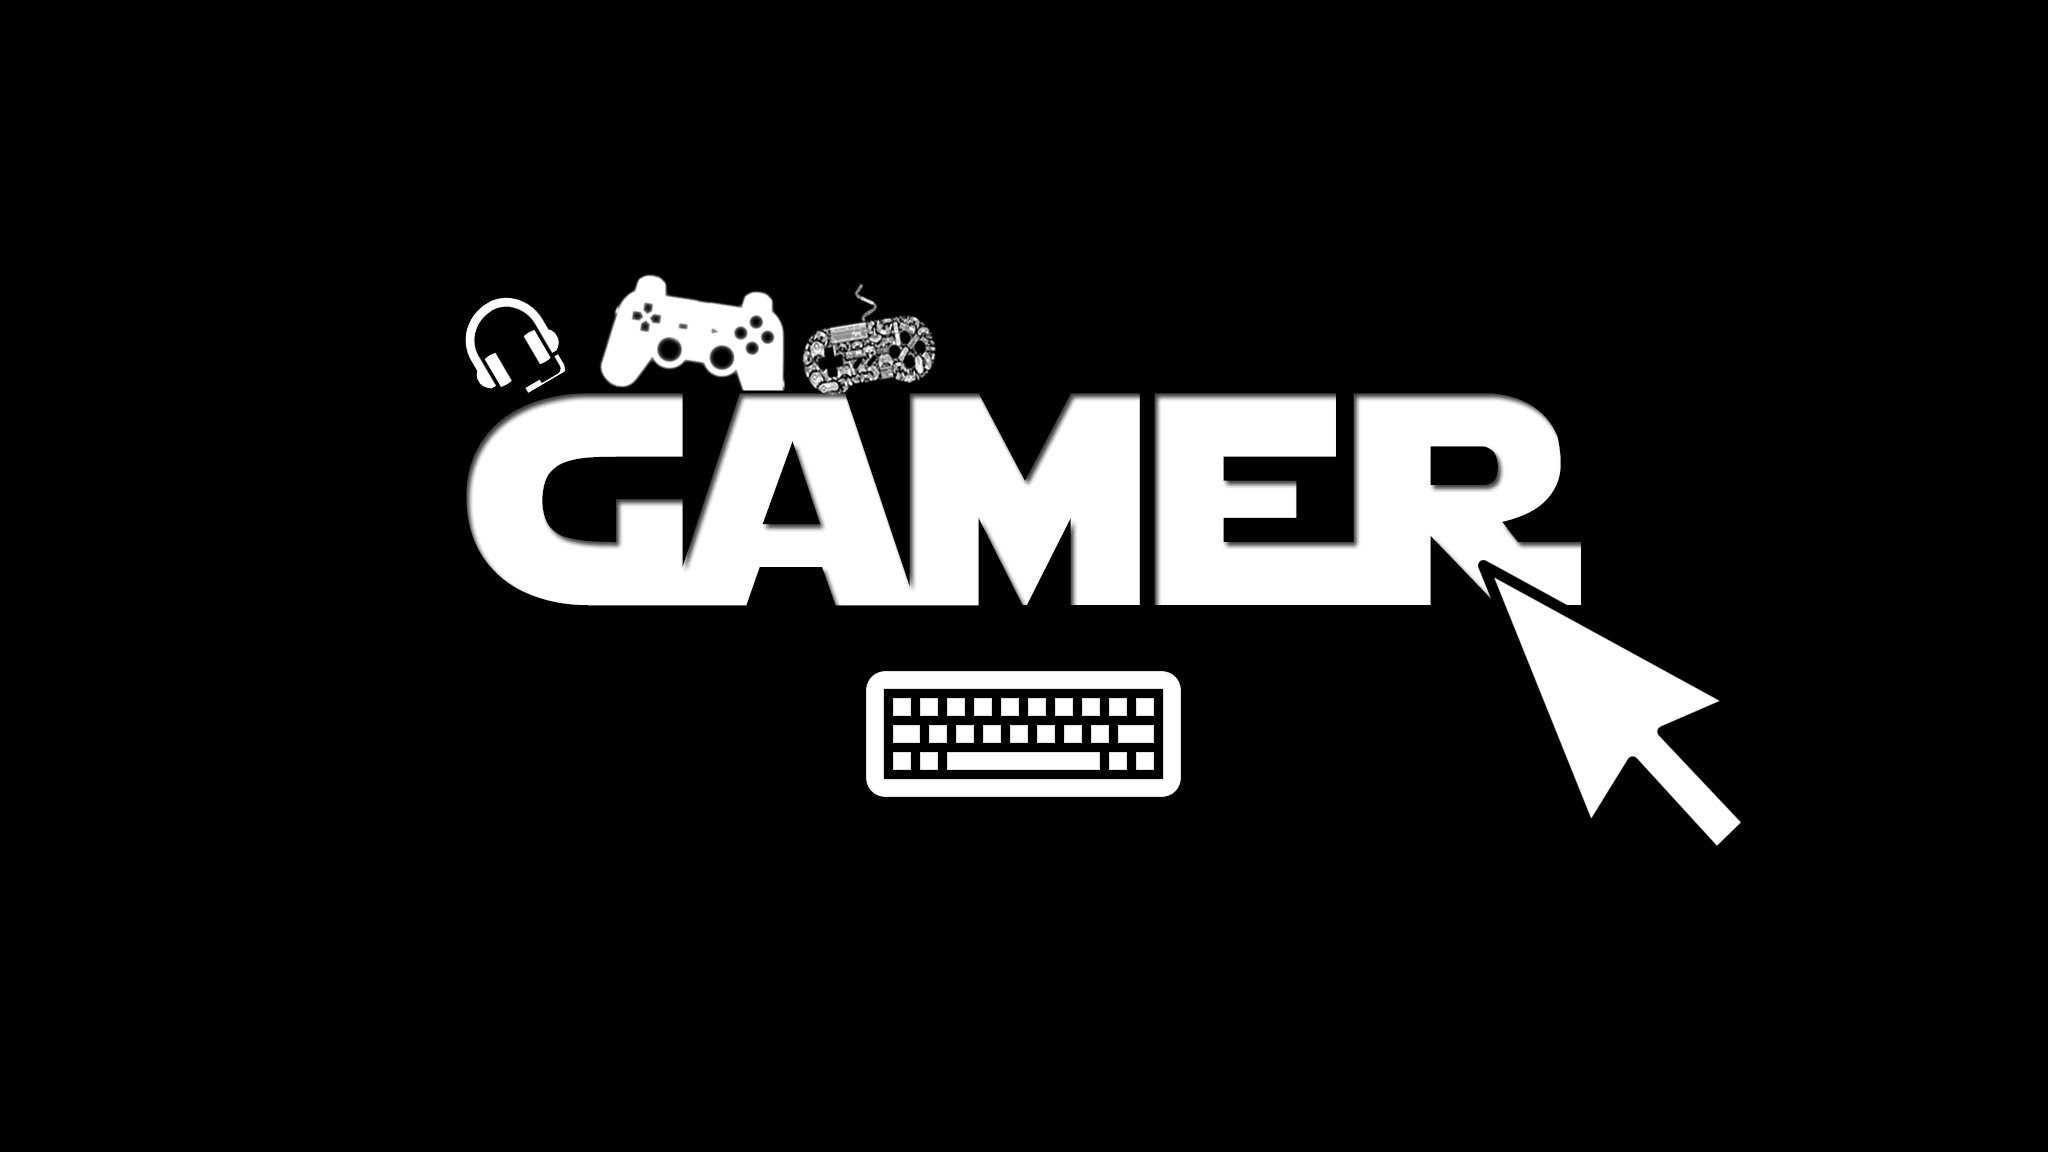 2048x1152 gamer wallpaper 33169 | Games | Pinterest | Wallpaper, Gaming and Gaming  wallpapers